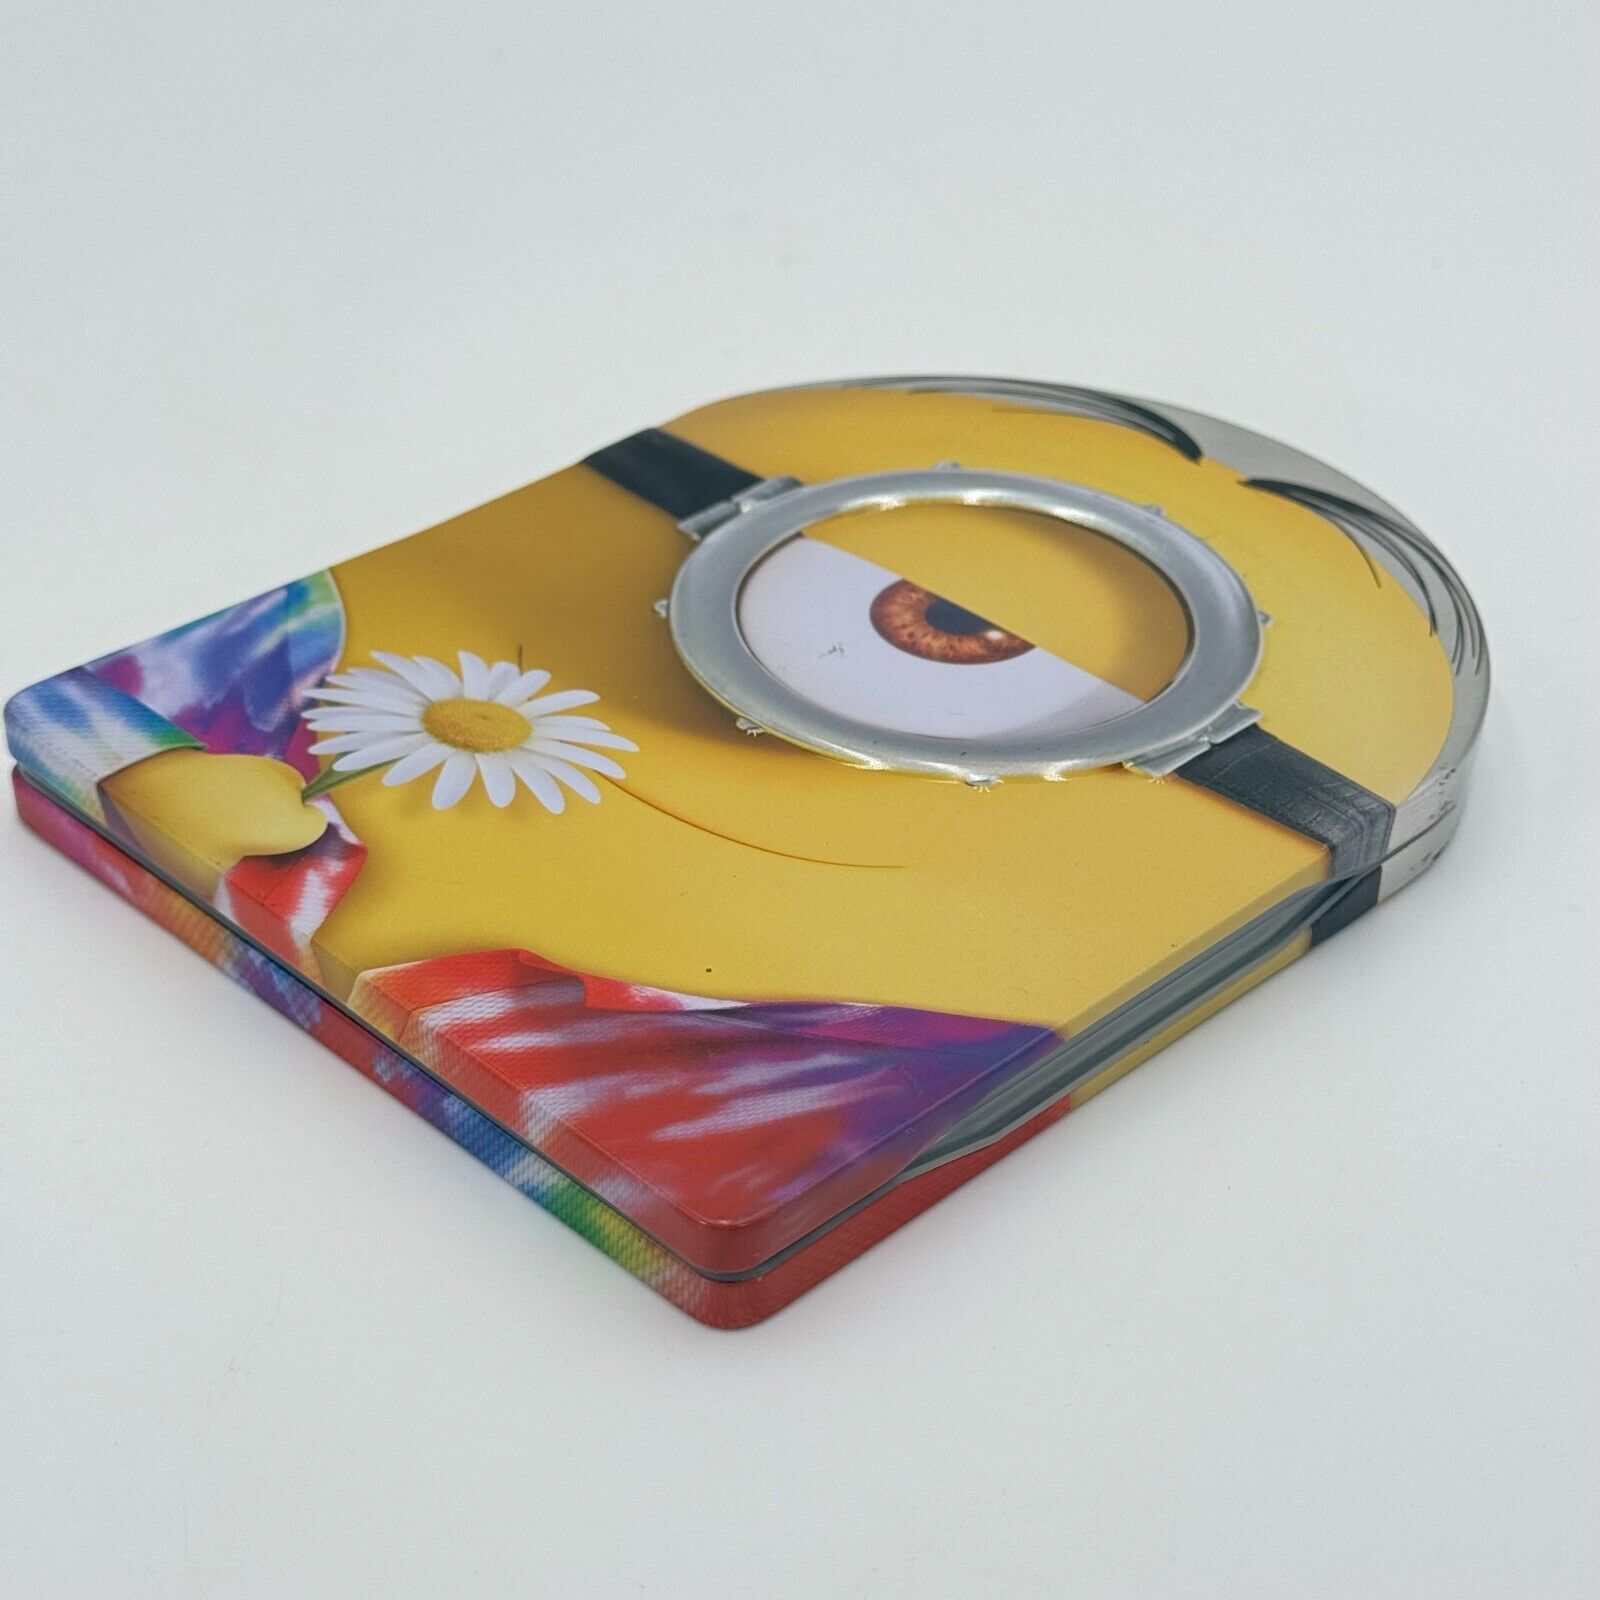 Minions - Limited Edition Steelbook (Blu-ray/DVD, 2014, 2-Disc Set)